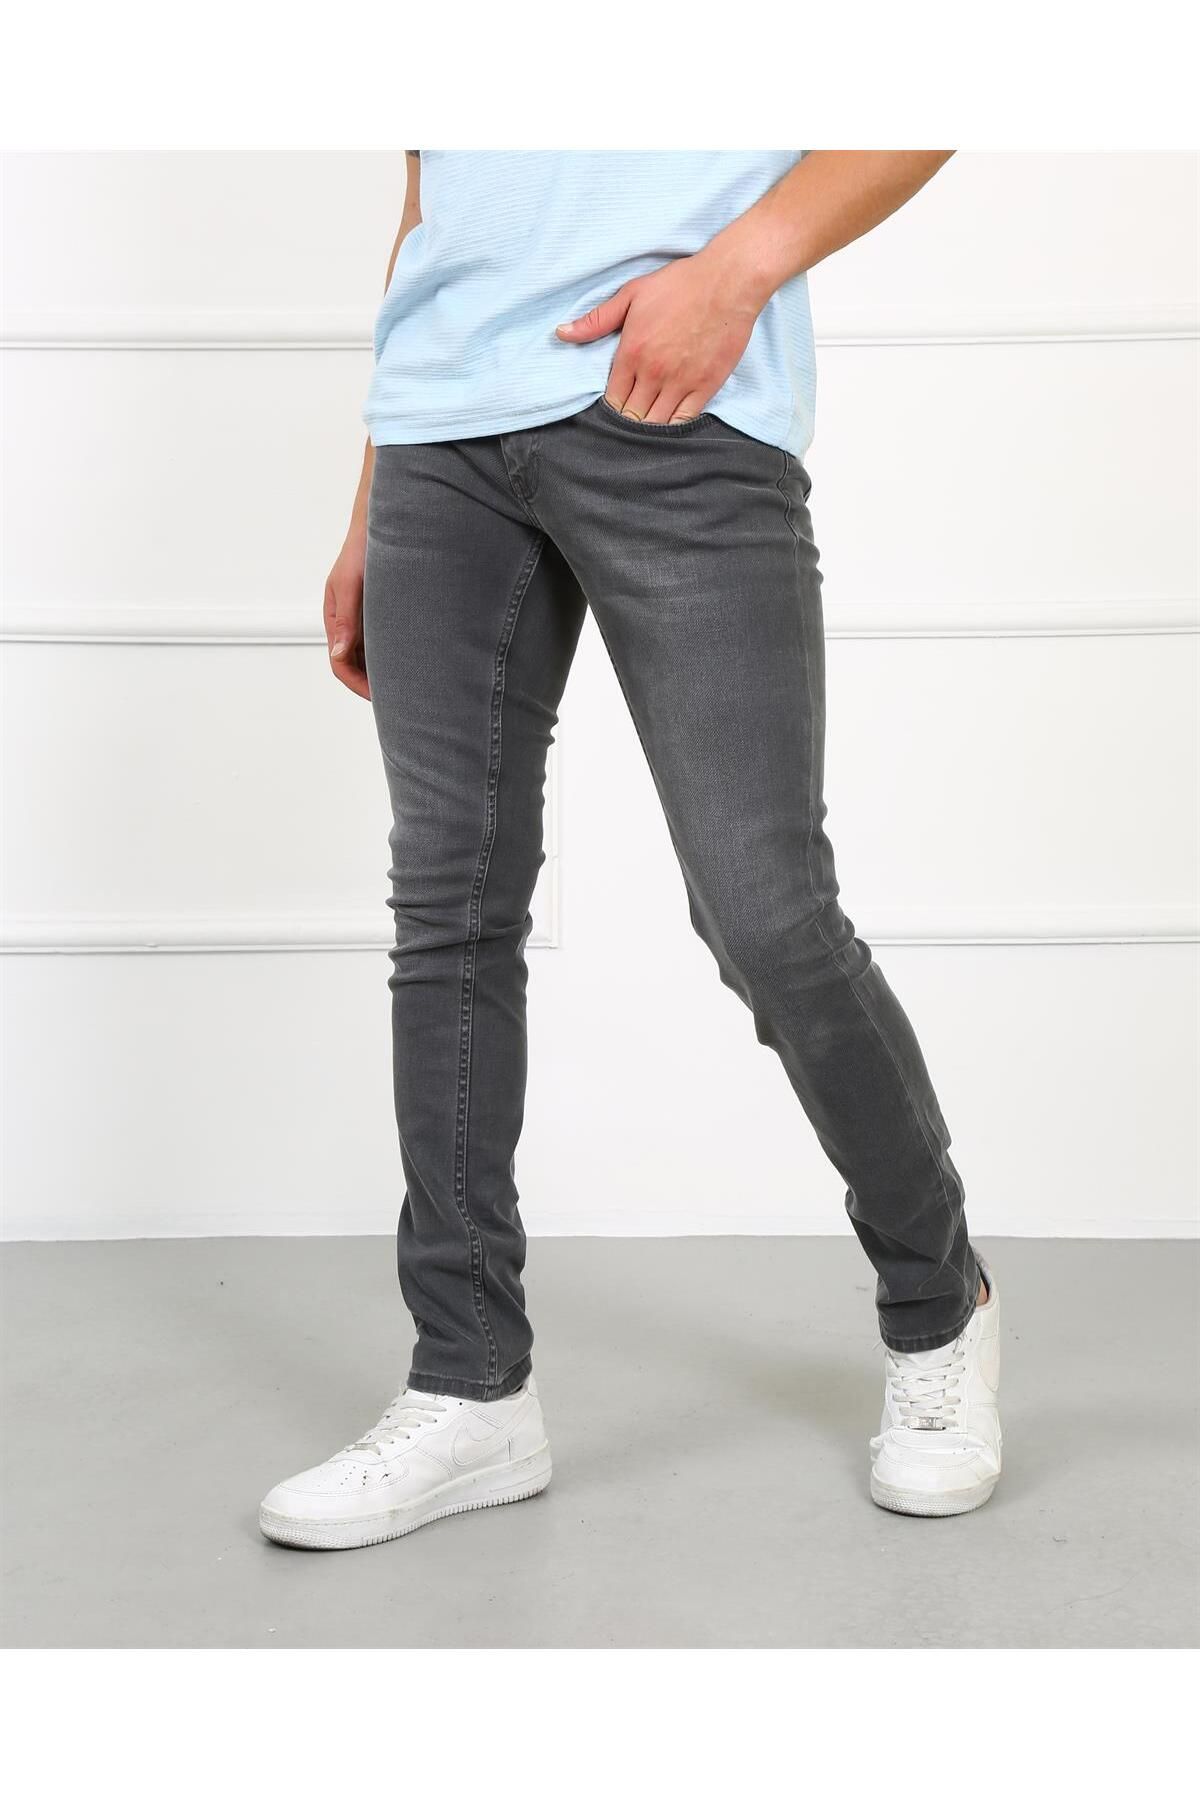 Twister Jeans Erkek Skinny Fit Düşük Bel Pantolon Panama Panama 675-01 Dark Grey